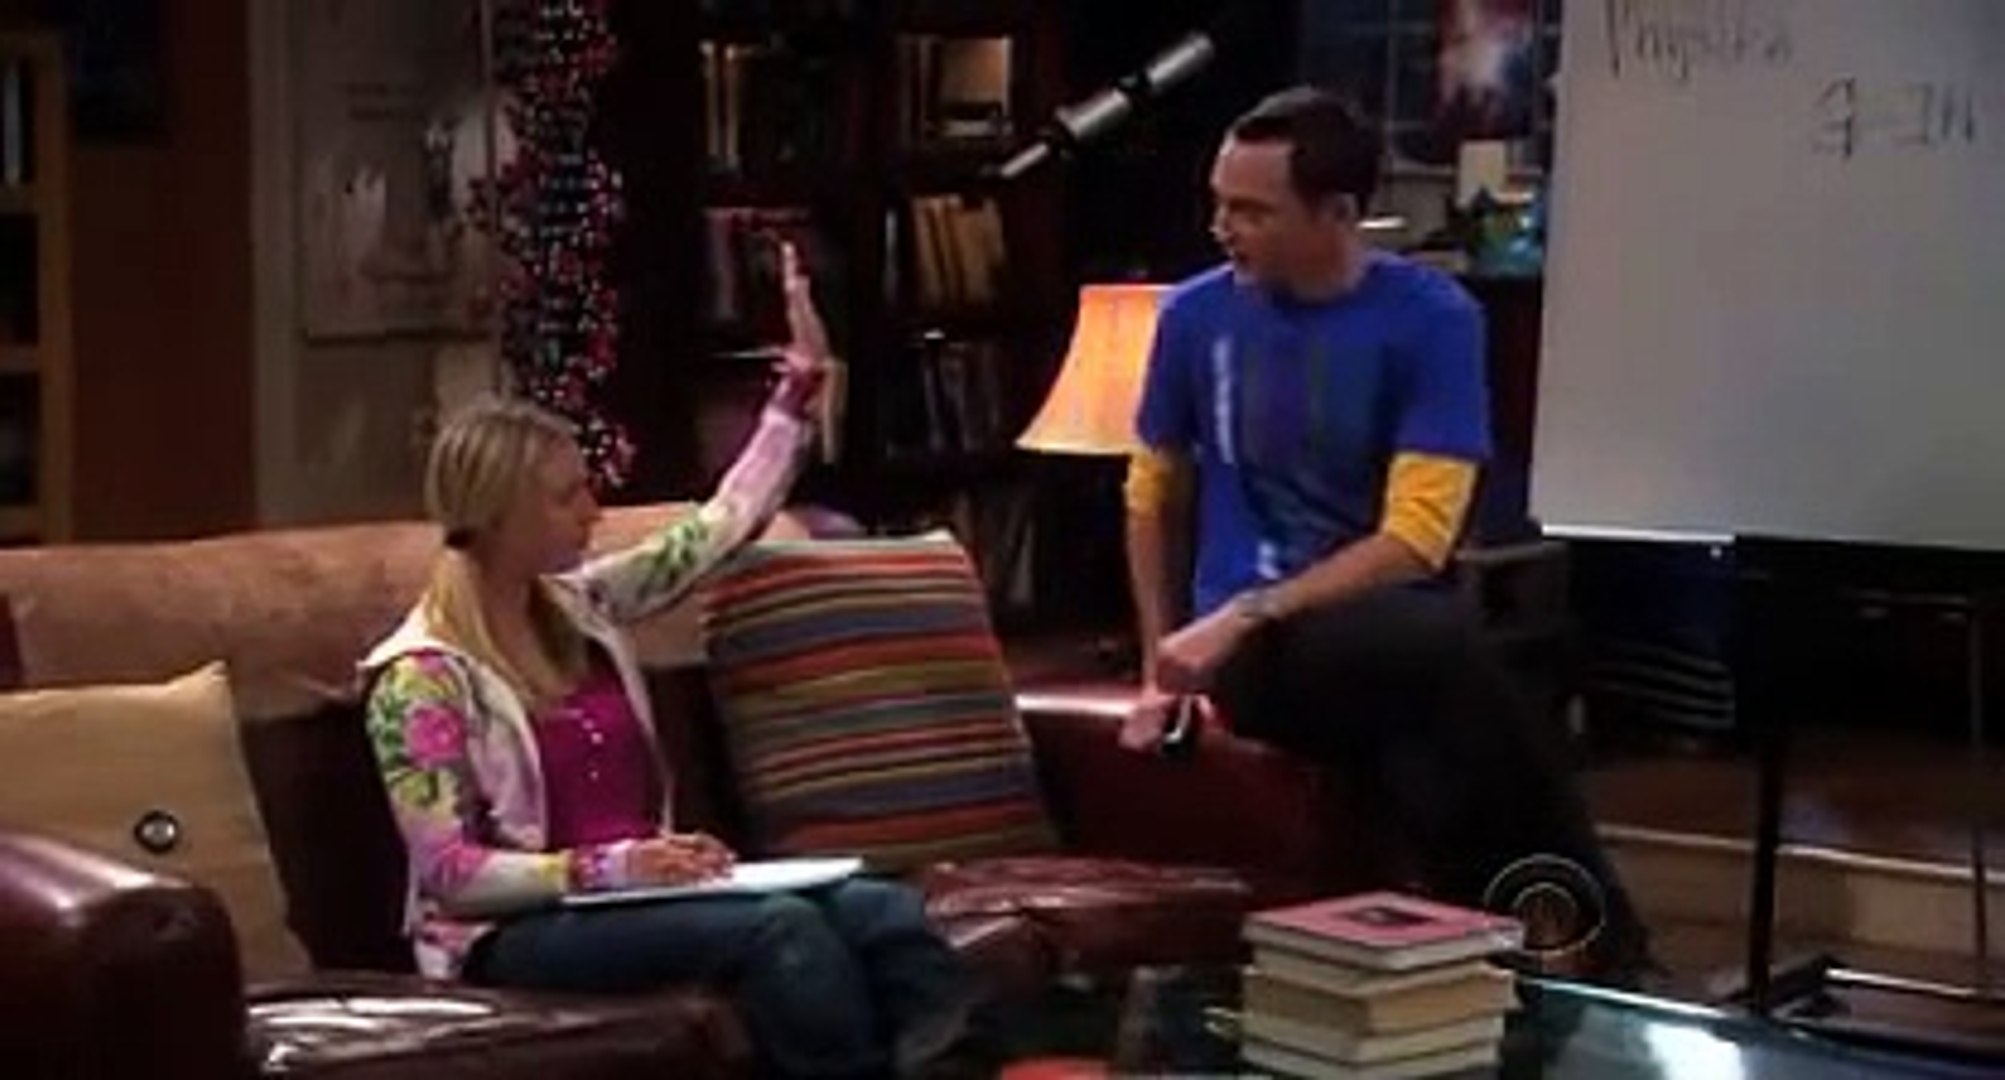 The Big Bang Theory - Sheldon teaches Penny Physics